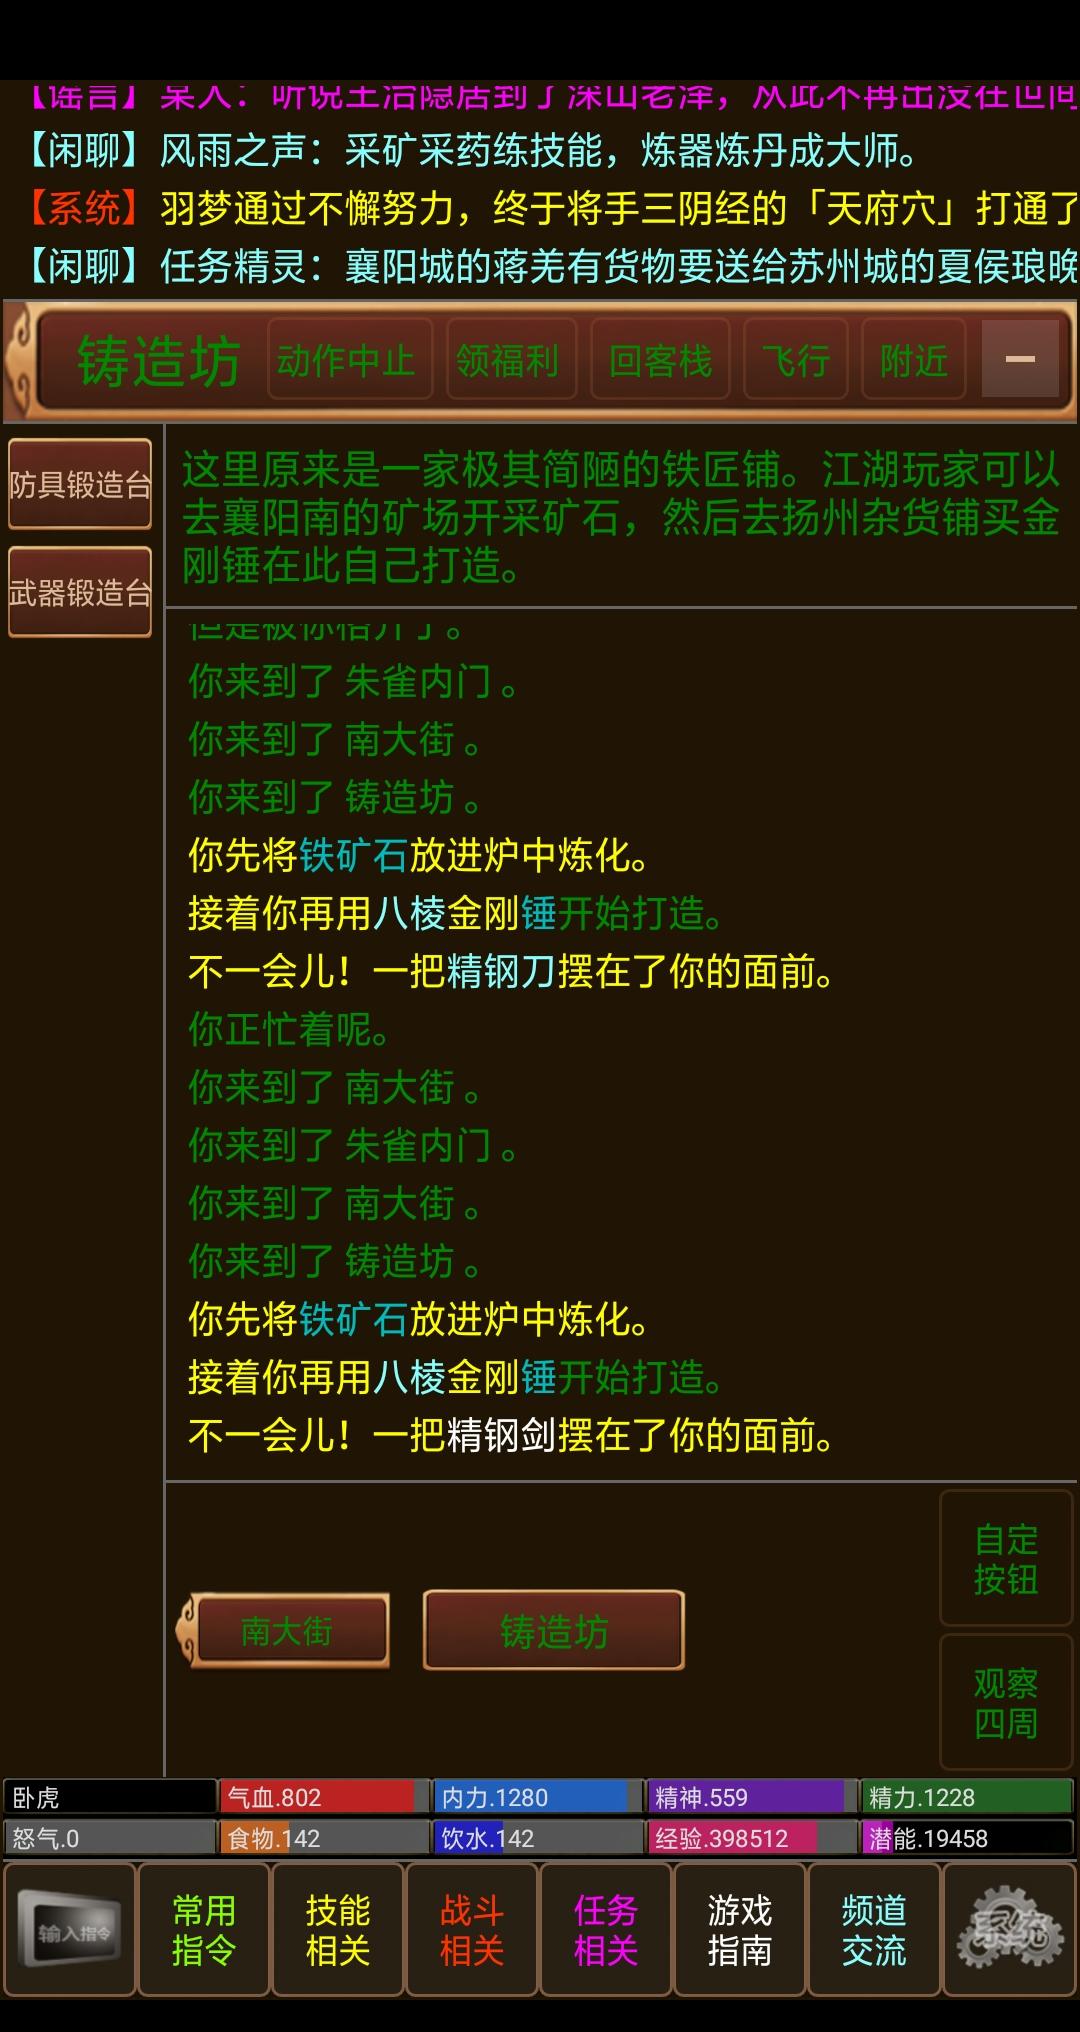 Screenshot 1 of Jiangshan လေပြင်းနှင့်မိုး 2.1.0